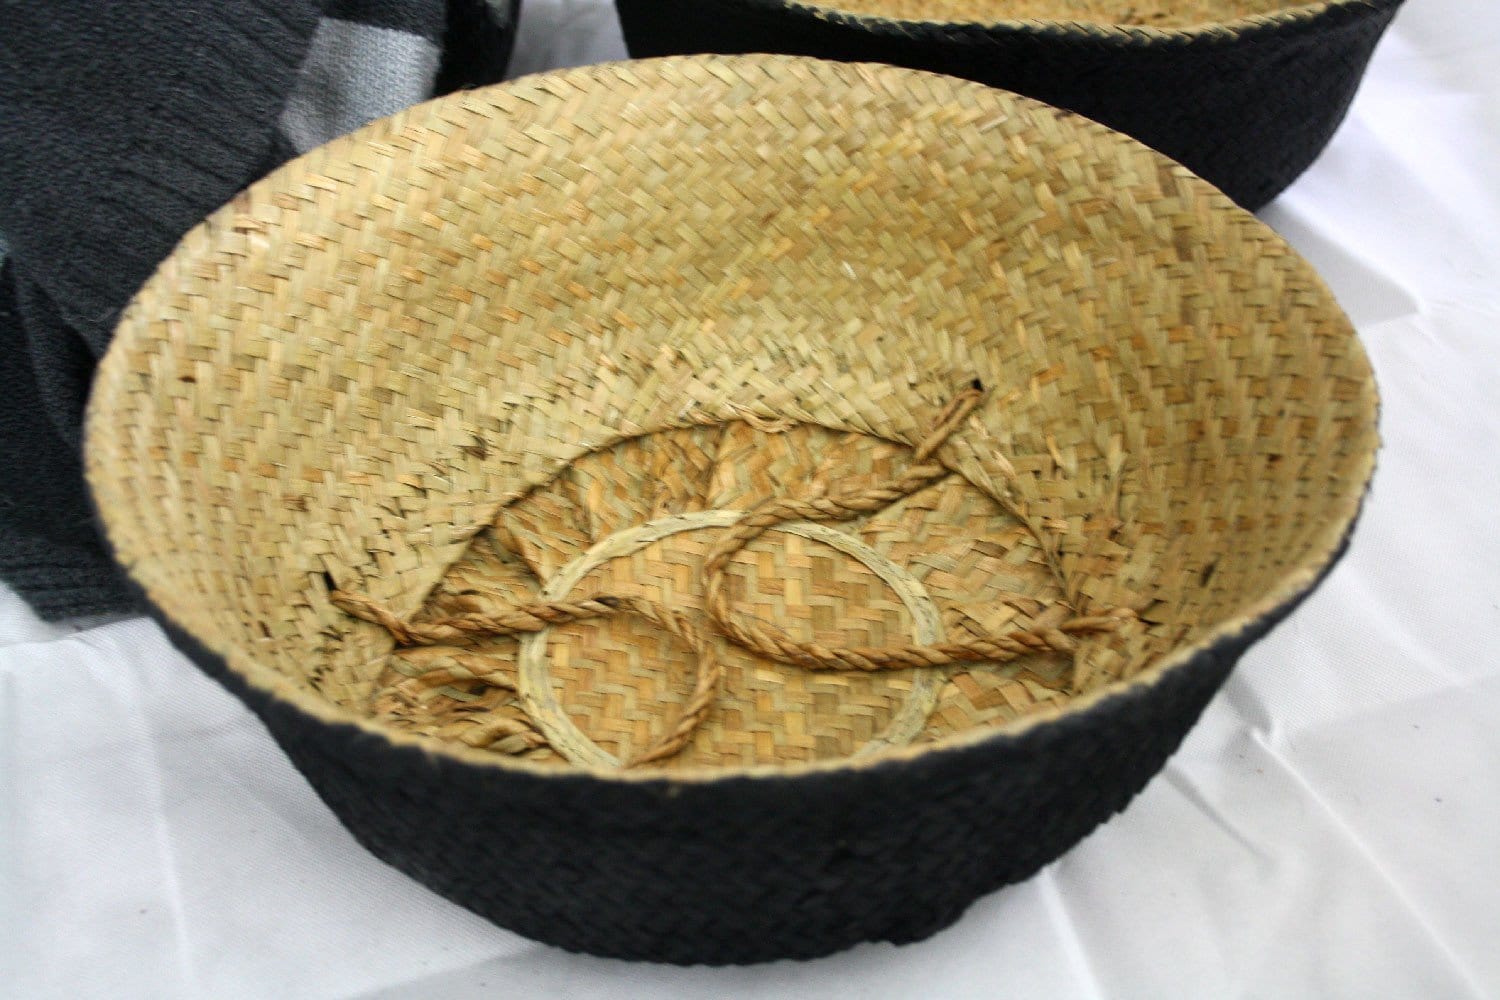 Medium Foldable Seagrass Belly Basket - Black.